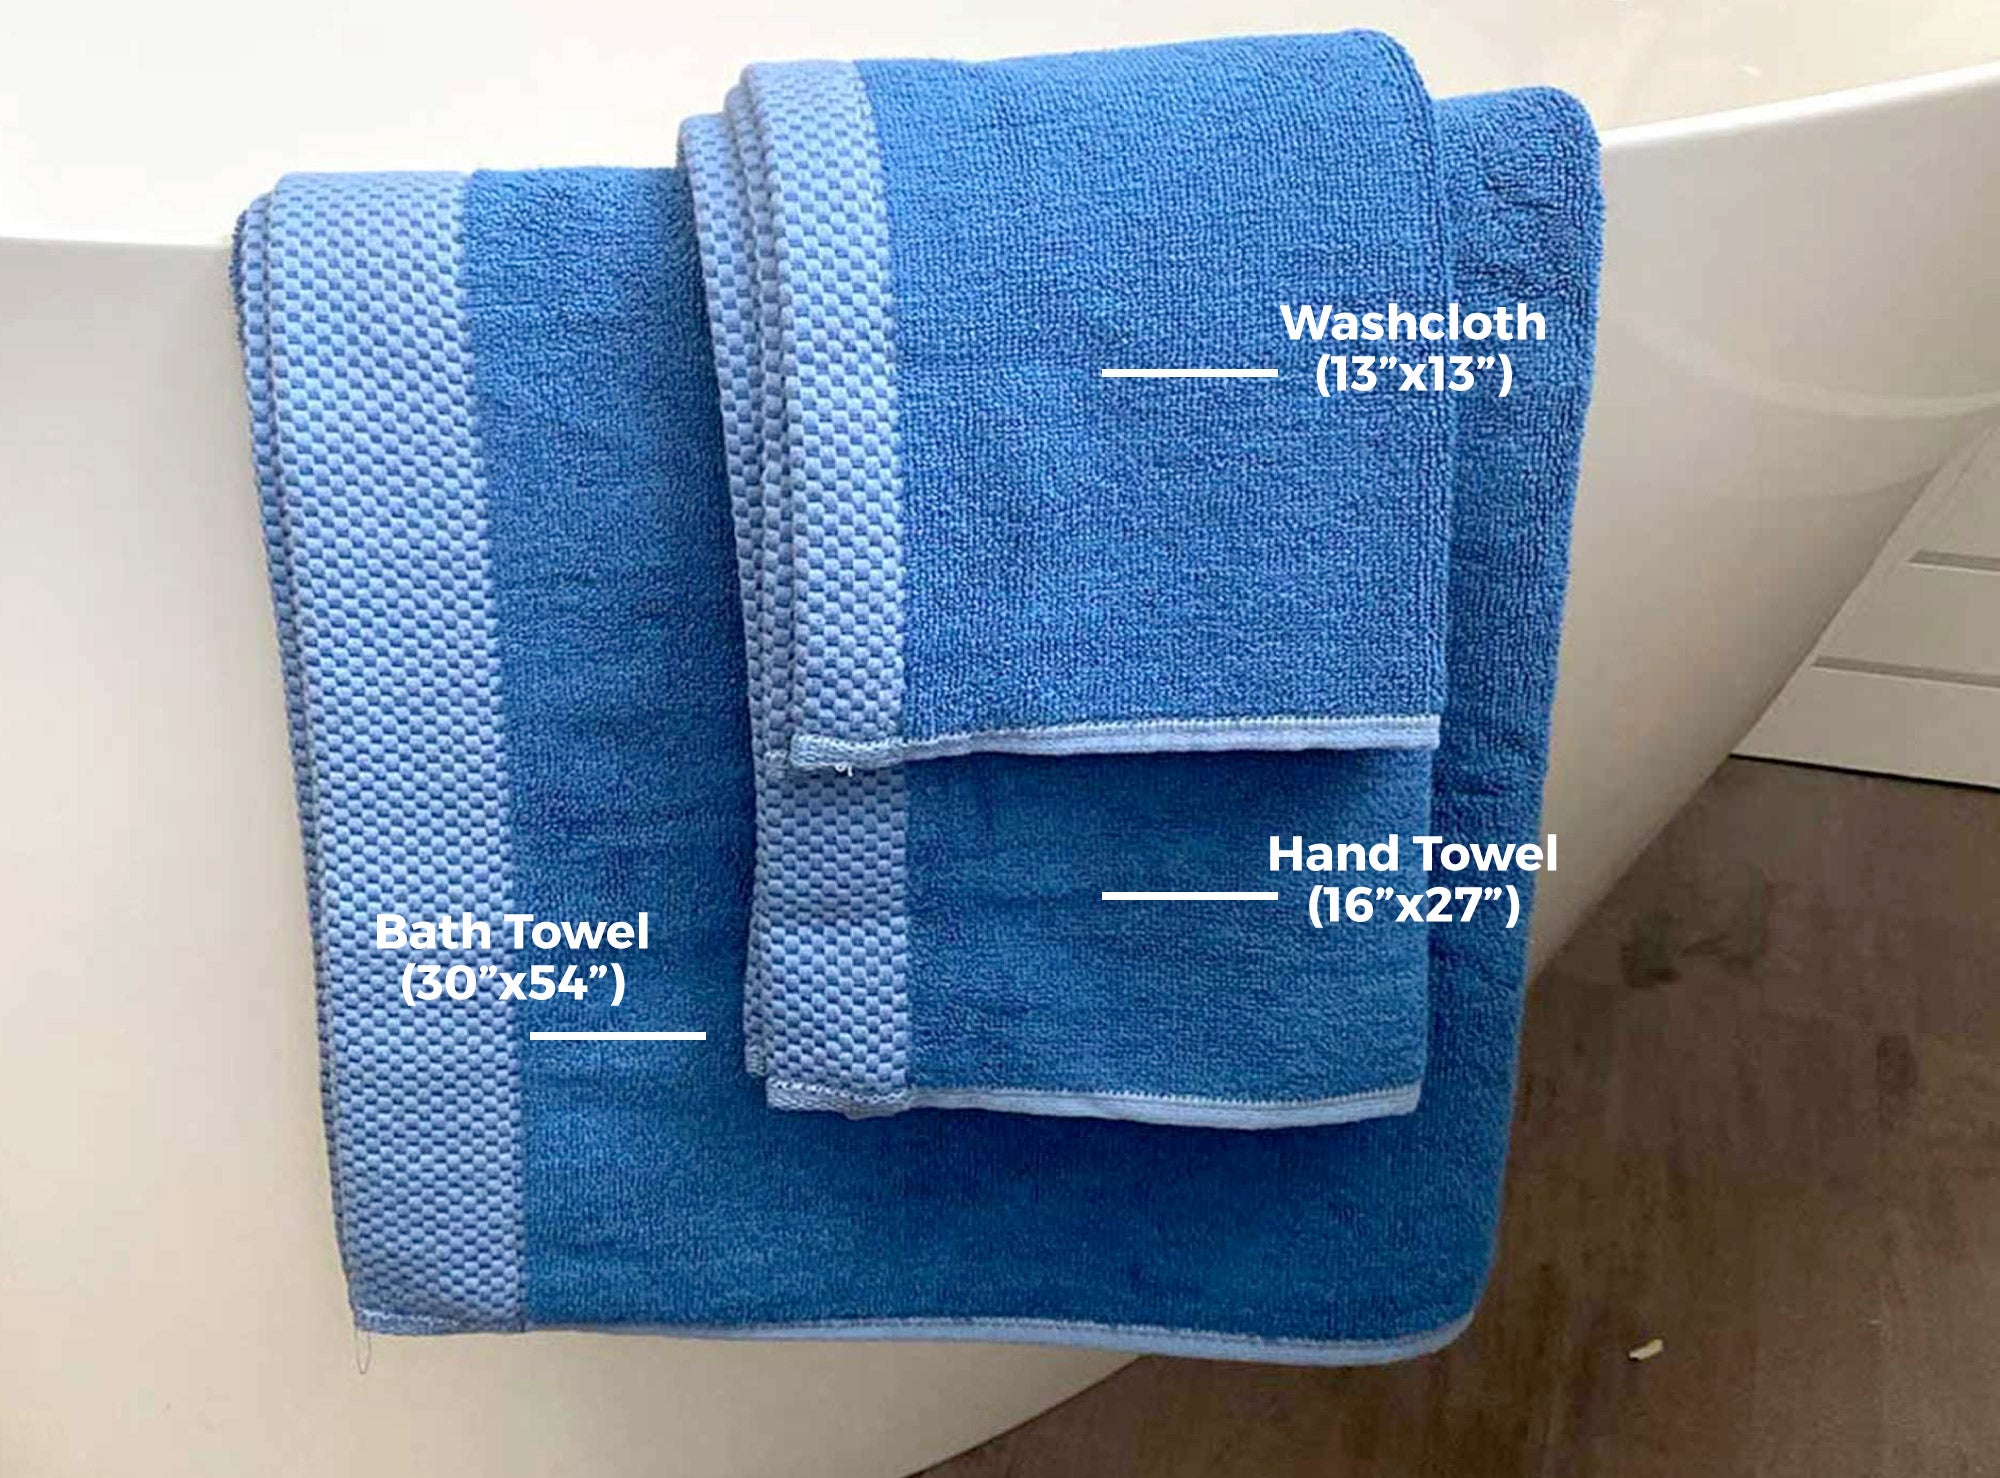 Bedvoyage eco-melange Rayon Bamboo Cotton Towels, 1 Bath Sheet, 2